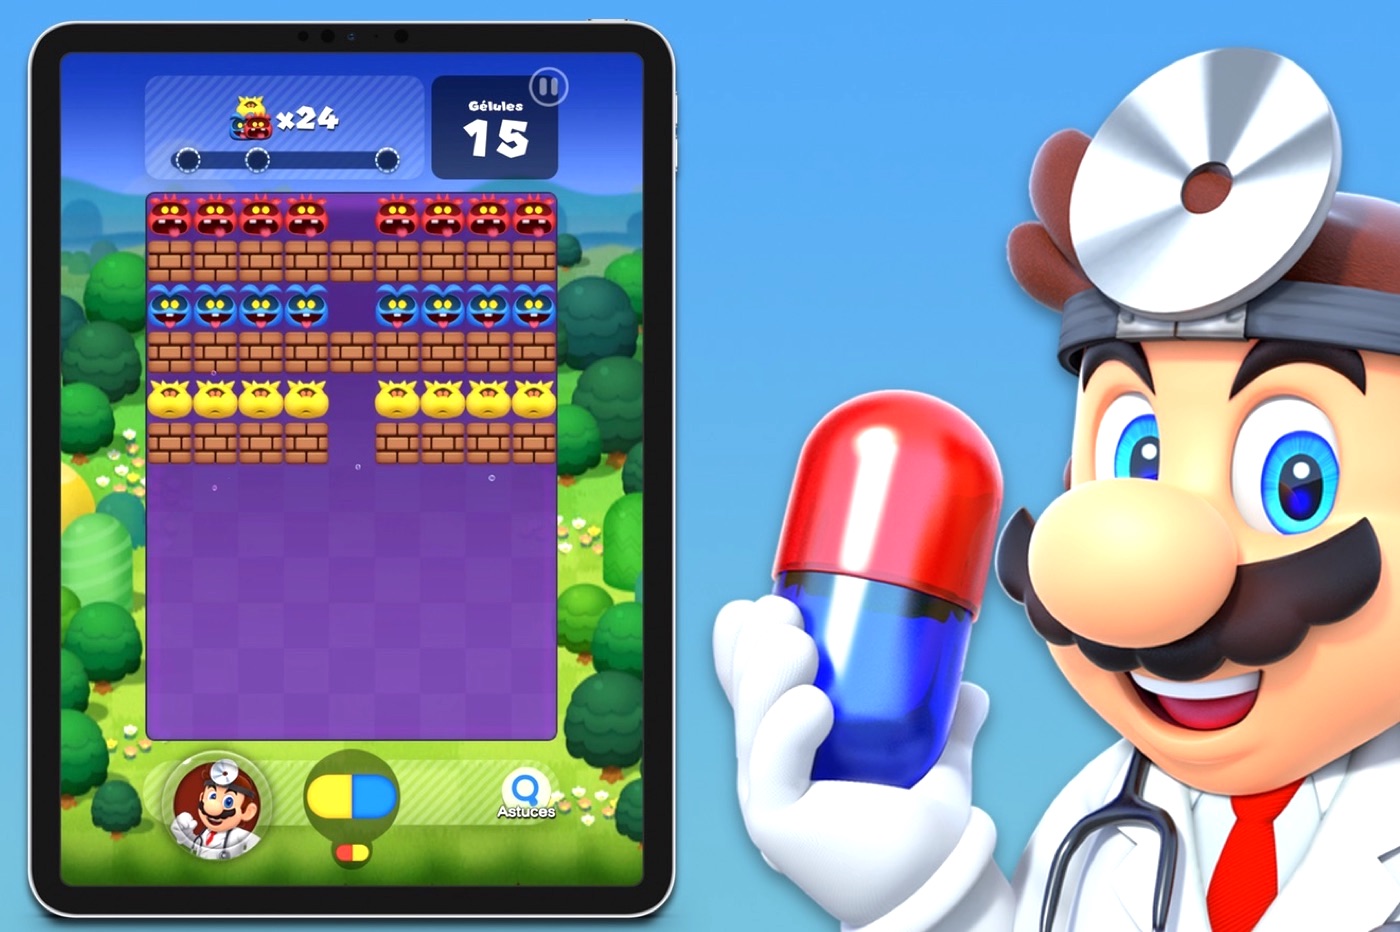 Nintendo puts the Dr. Mario handheld game in the locker